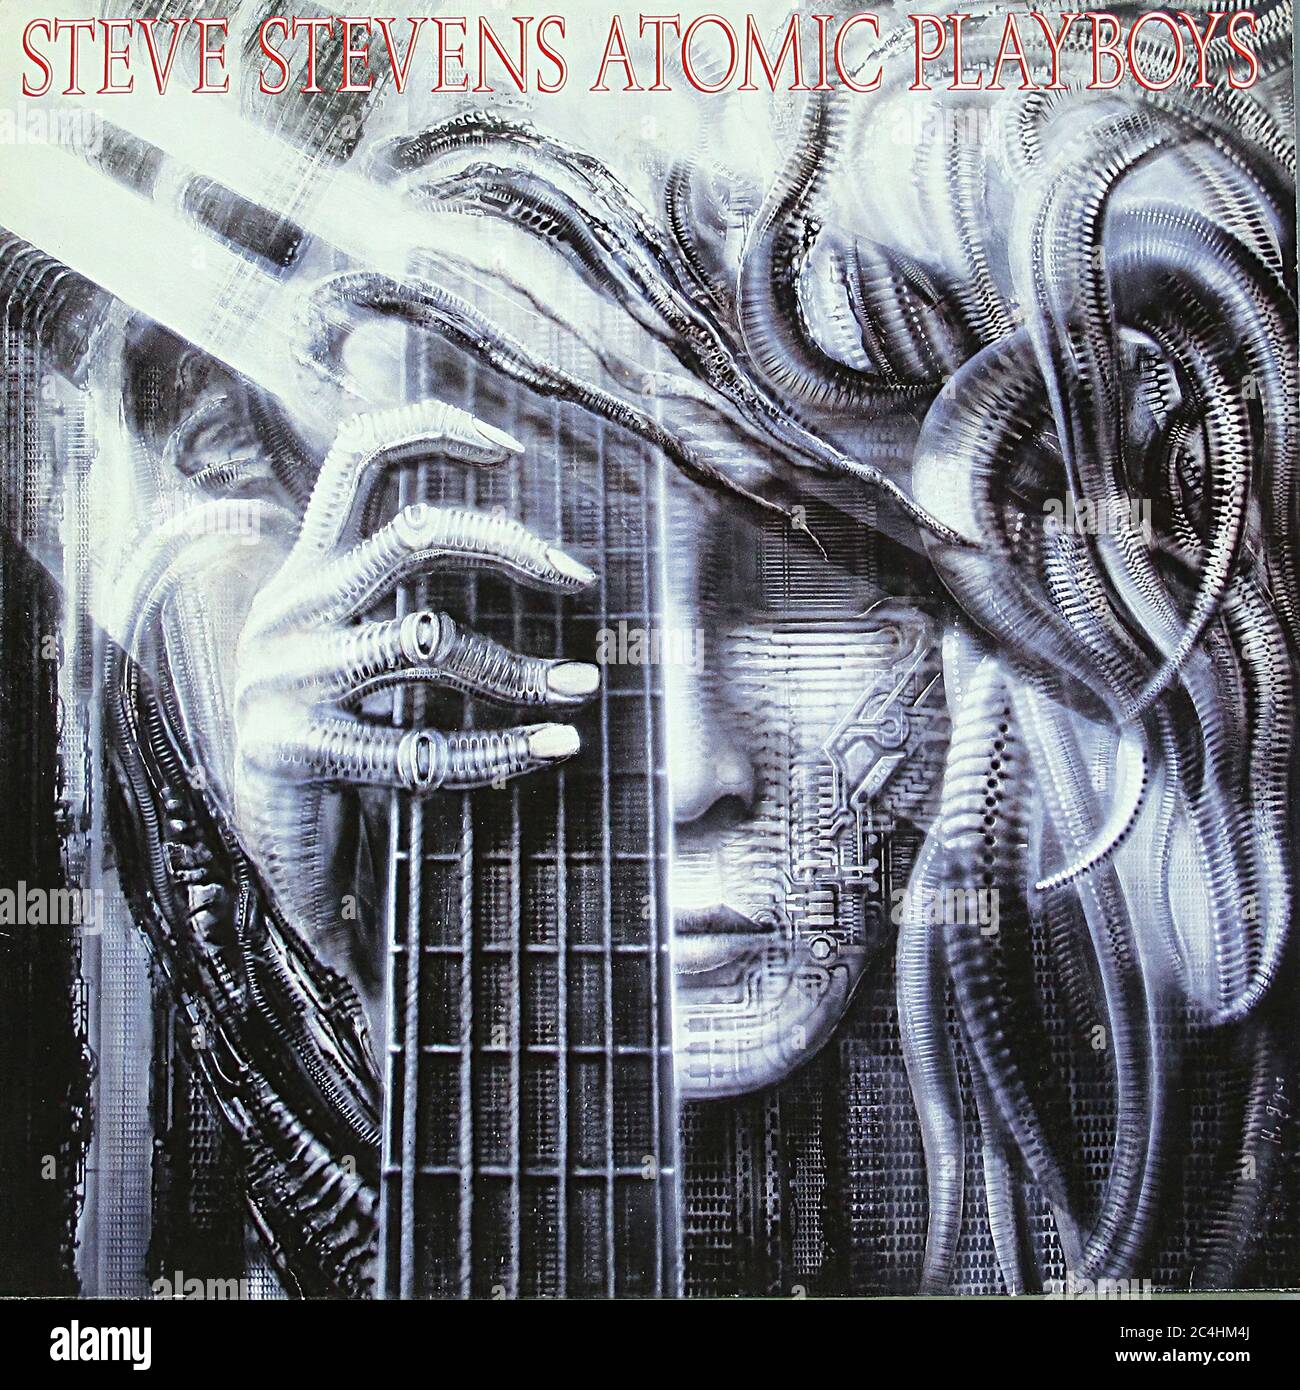 STEVE STEVENS Atomic Playboy HR Giger Billy Idol 12'' Vinyl LP - Vintage record cover 01 Foto Stock